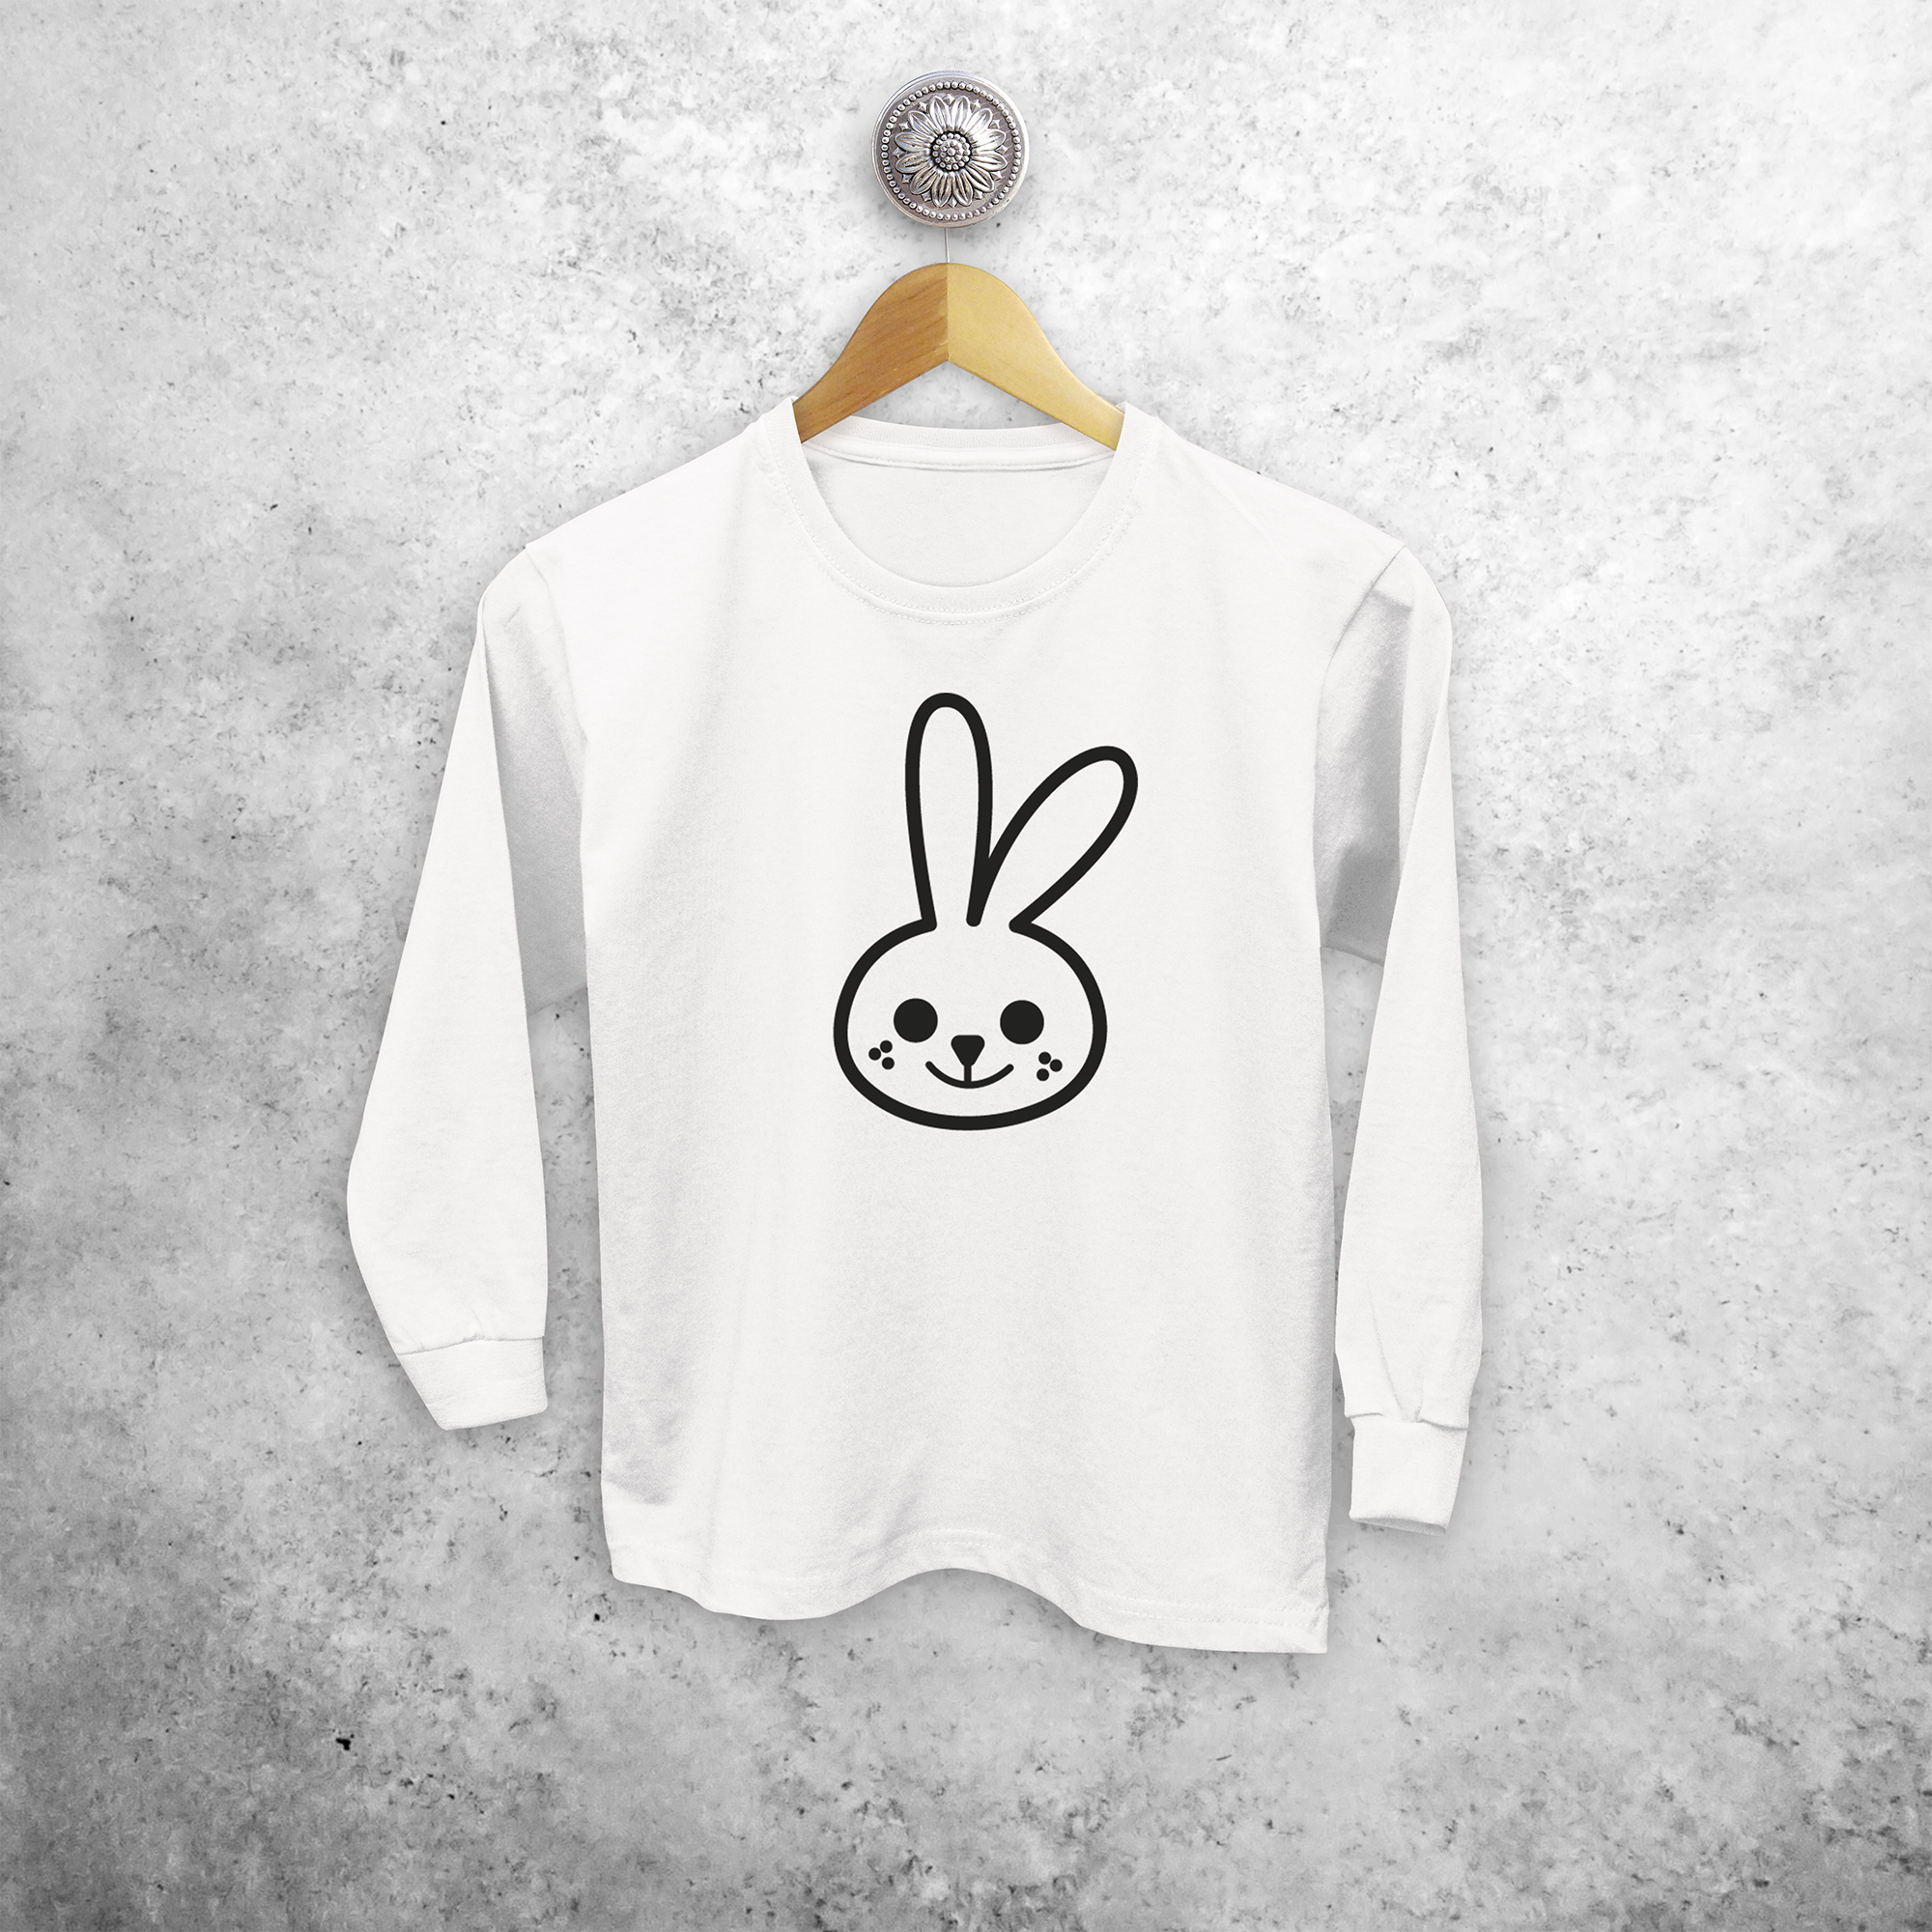 Bunny longsleeve kids shirt